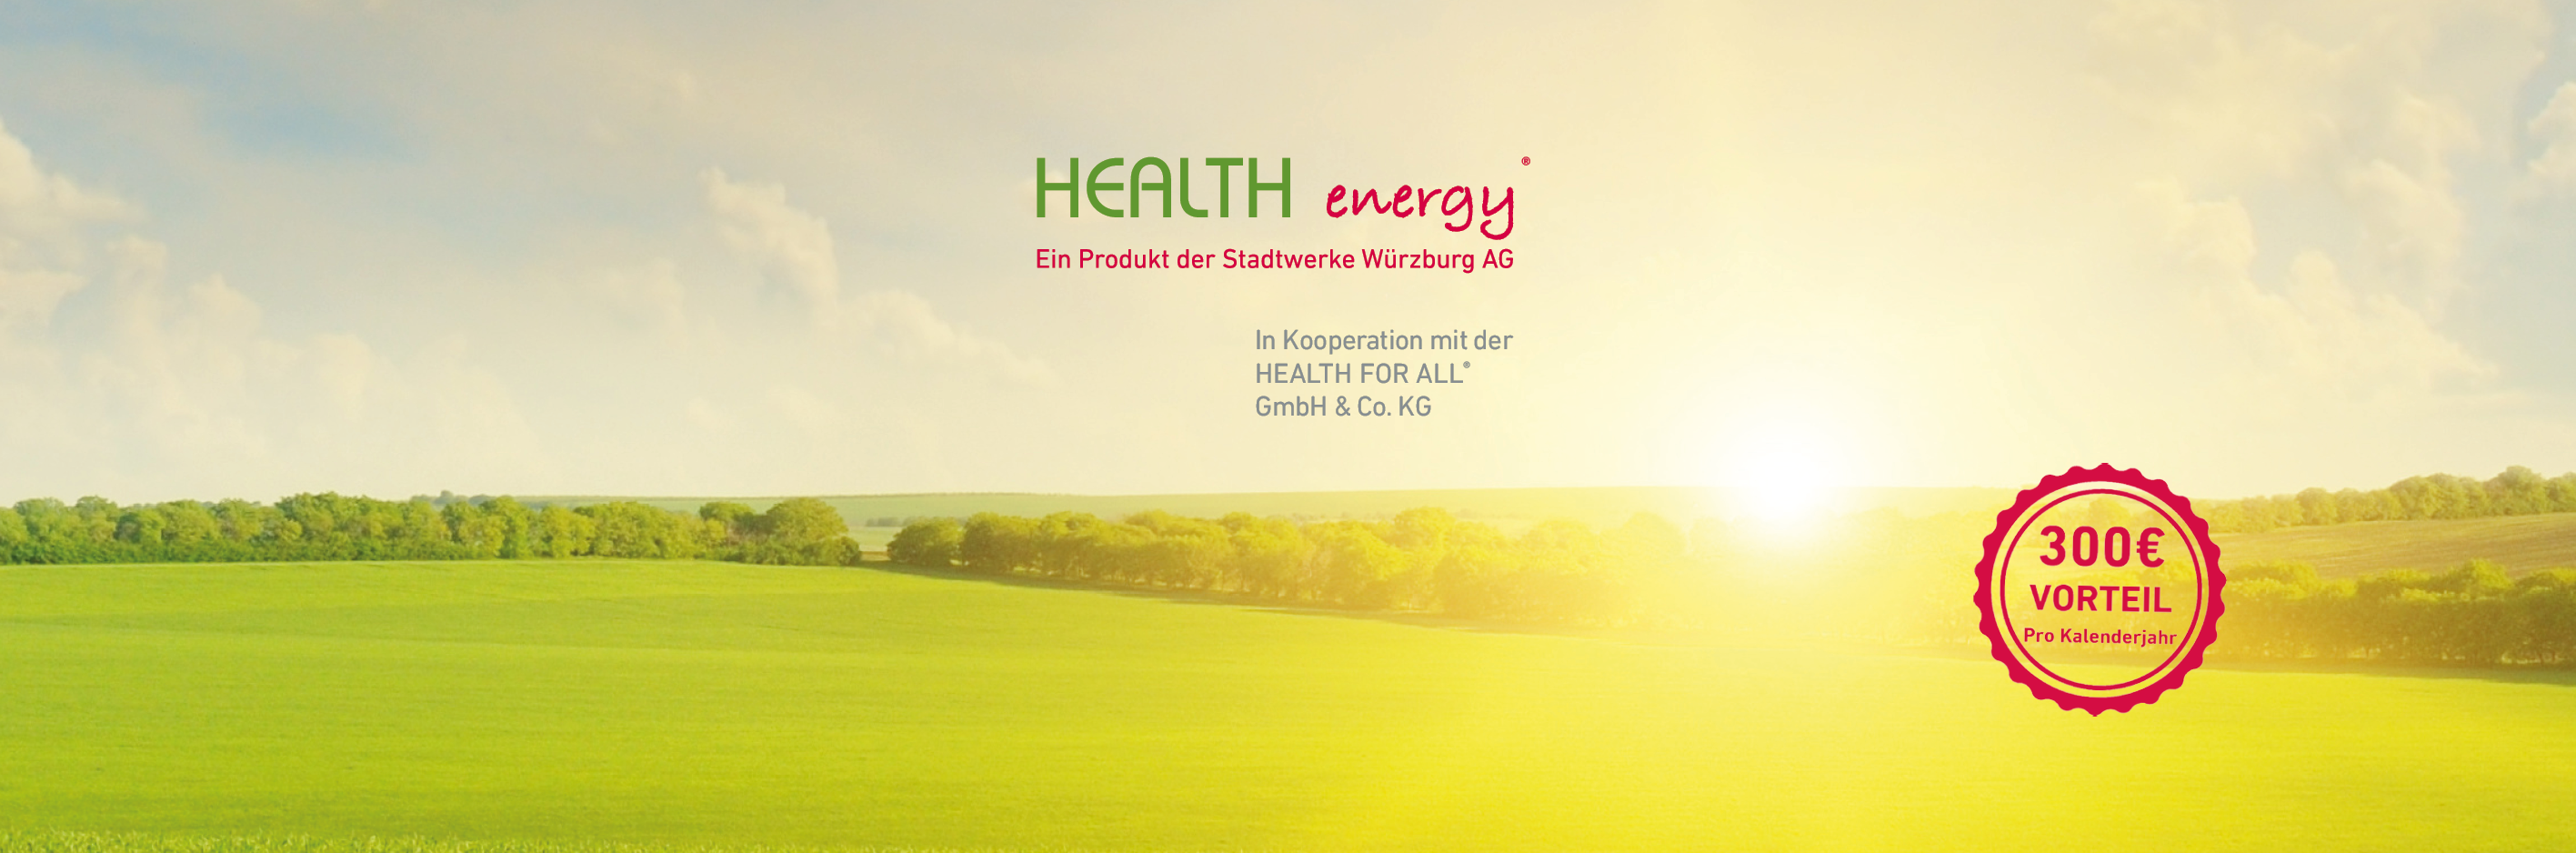 HEALTH_energy